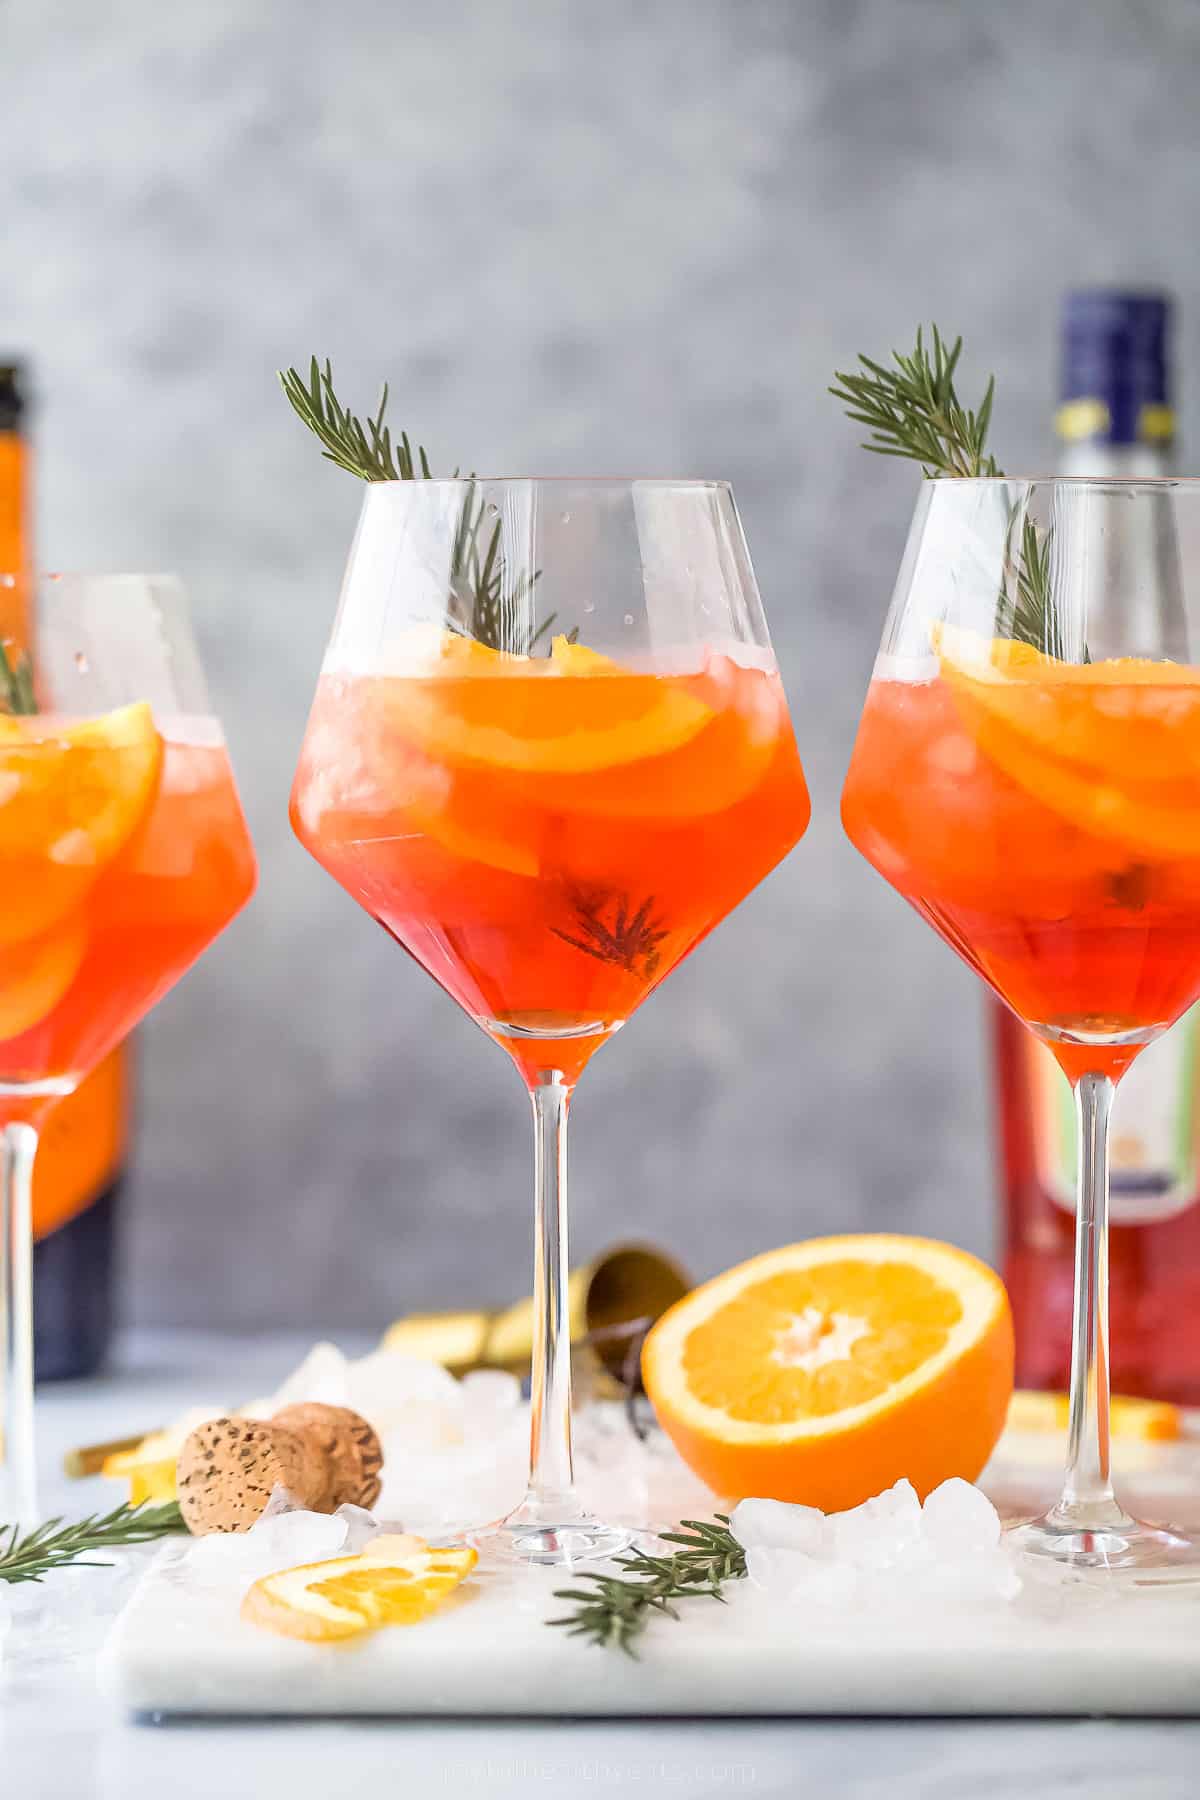 three ،liday aperol spritz ،tails - a dark orange drink with orange slices and rosemary garnish